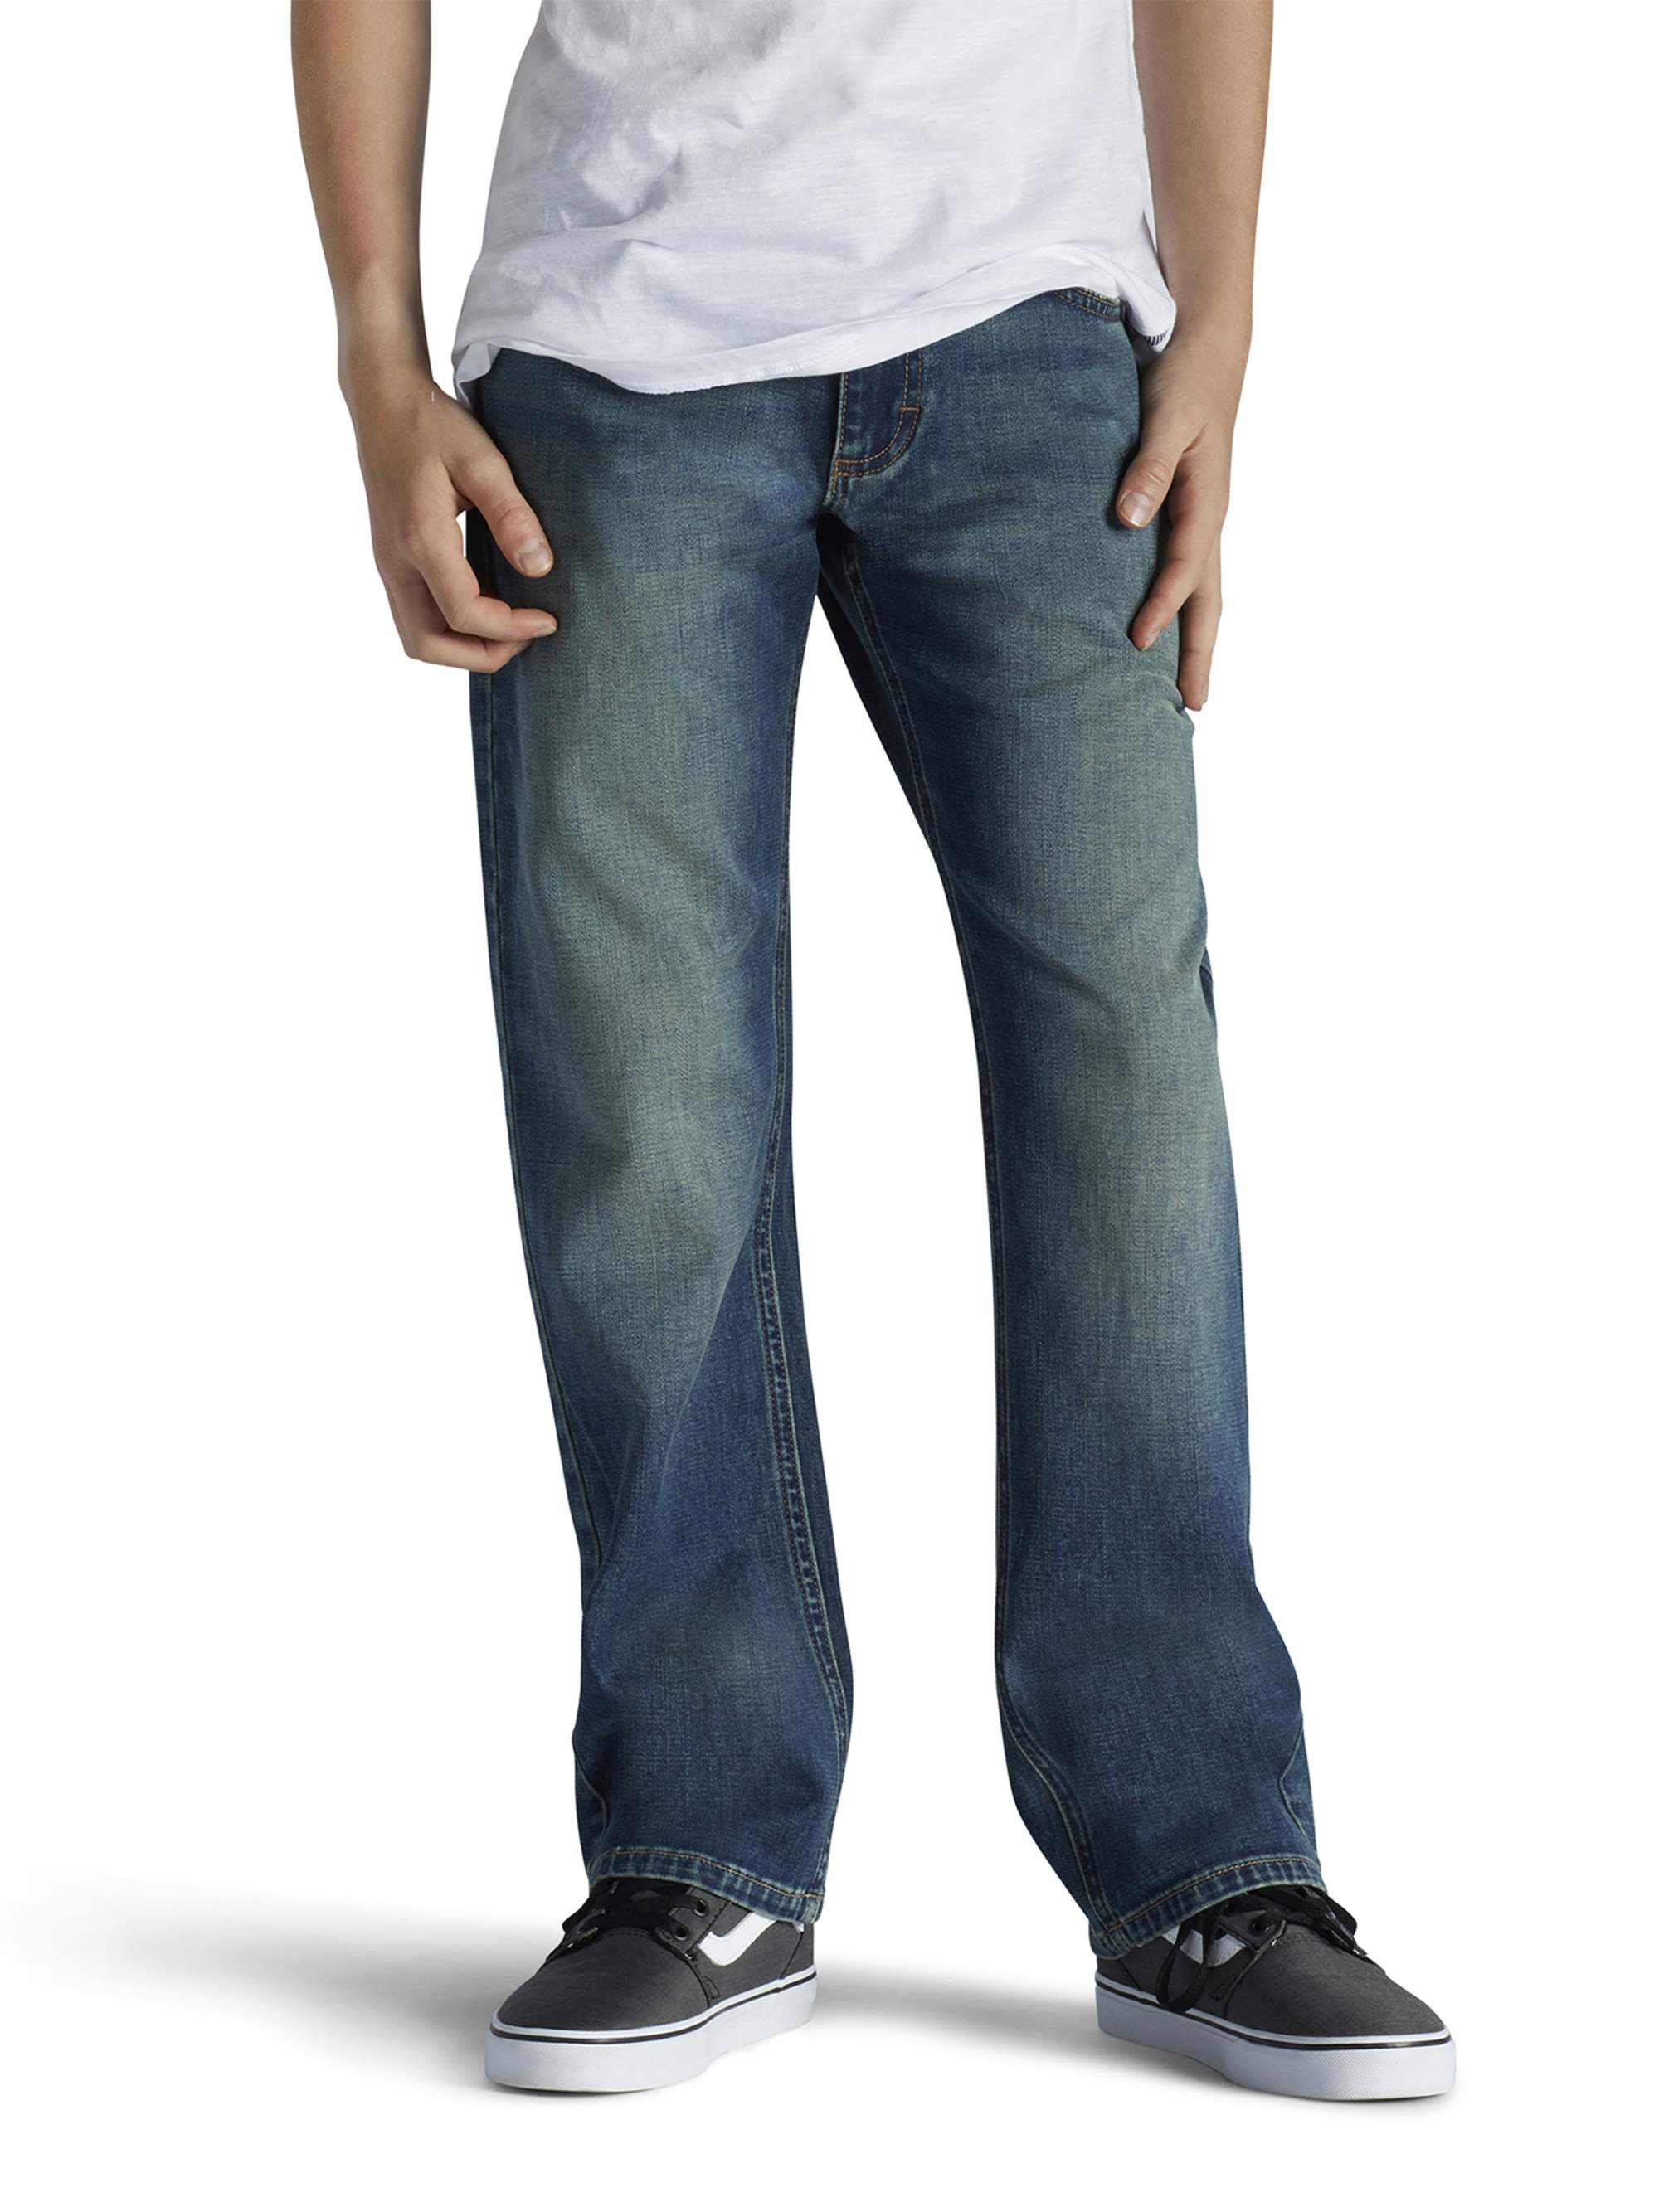 Lee Boys Sport Xtreme Straight Leg Jeans, Sizes 8-18 & Husky - image 1 of 3